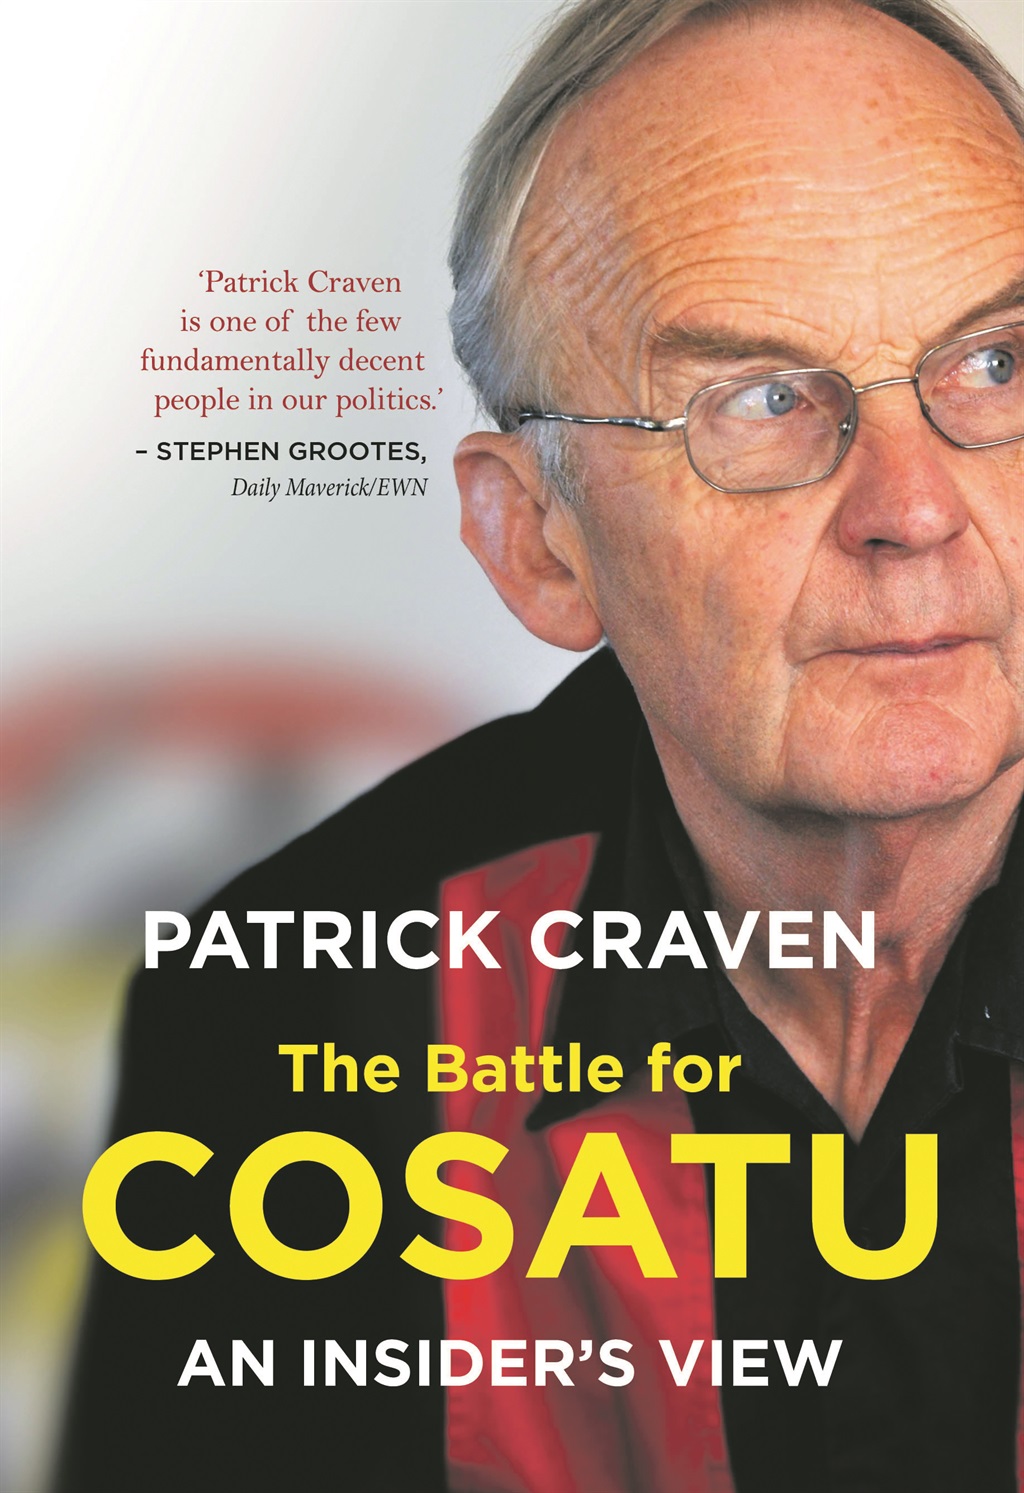 Patrick Craven’s book reflects on Cosatu’s internal battles 